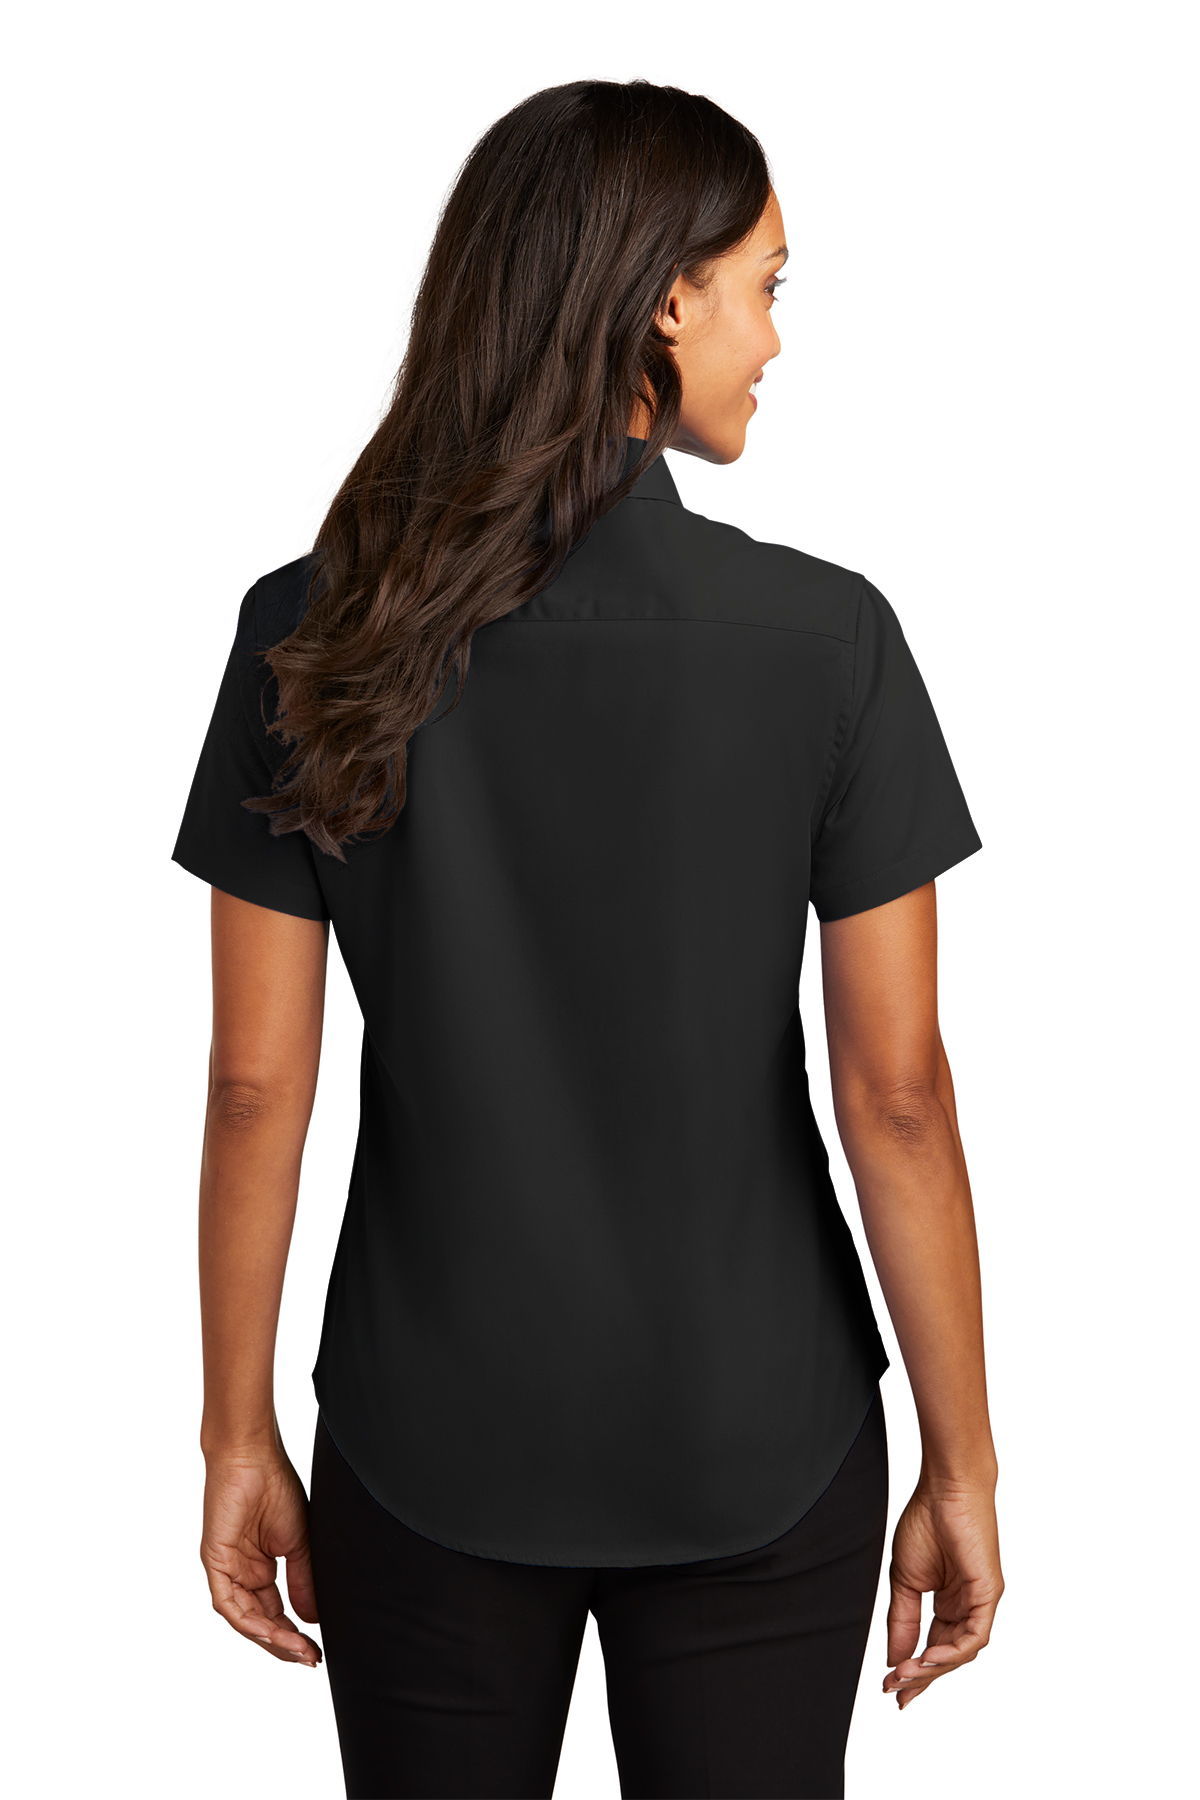 Authority Care Product | Ladies Sleeve Port | Authority Short Port Shirt Easy